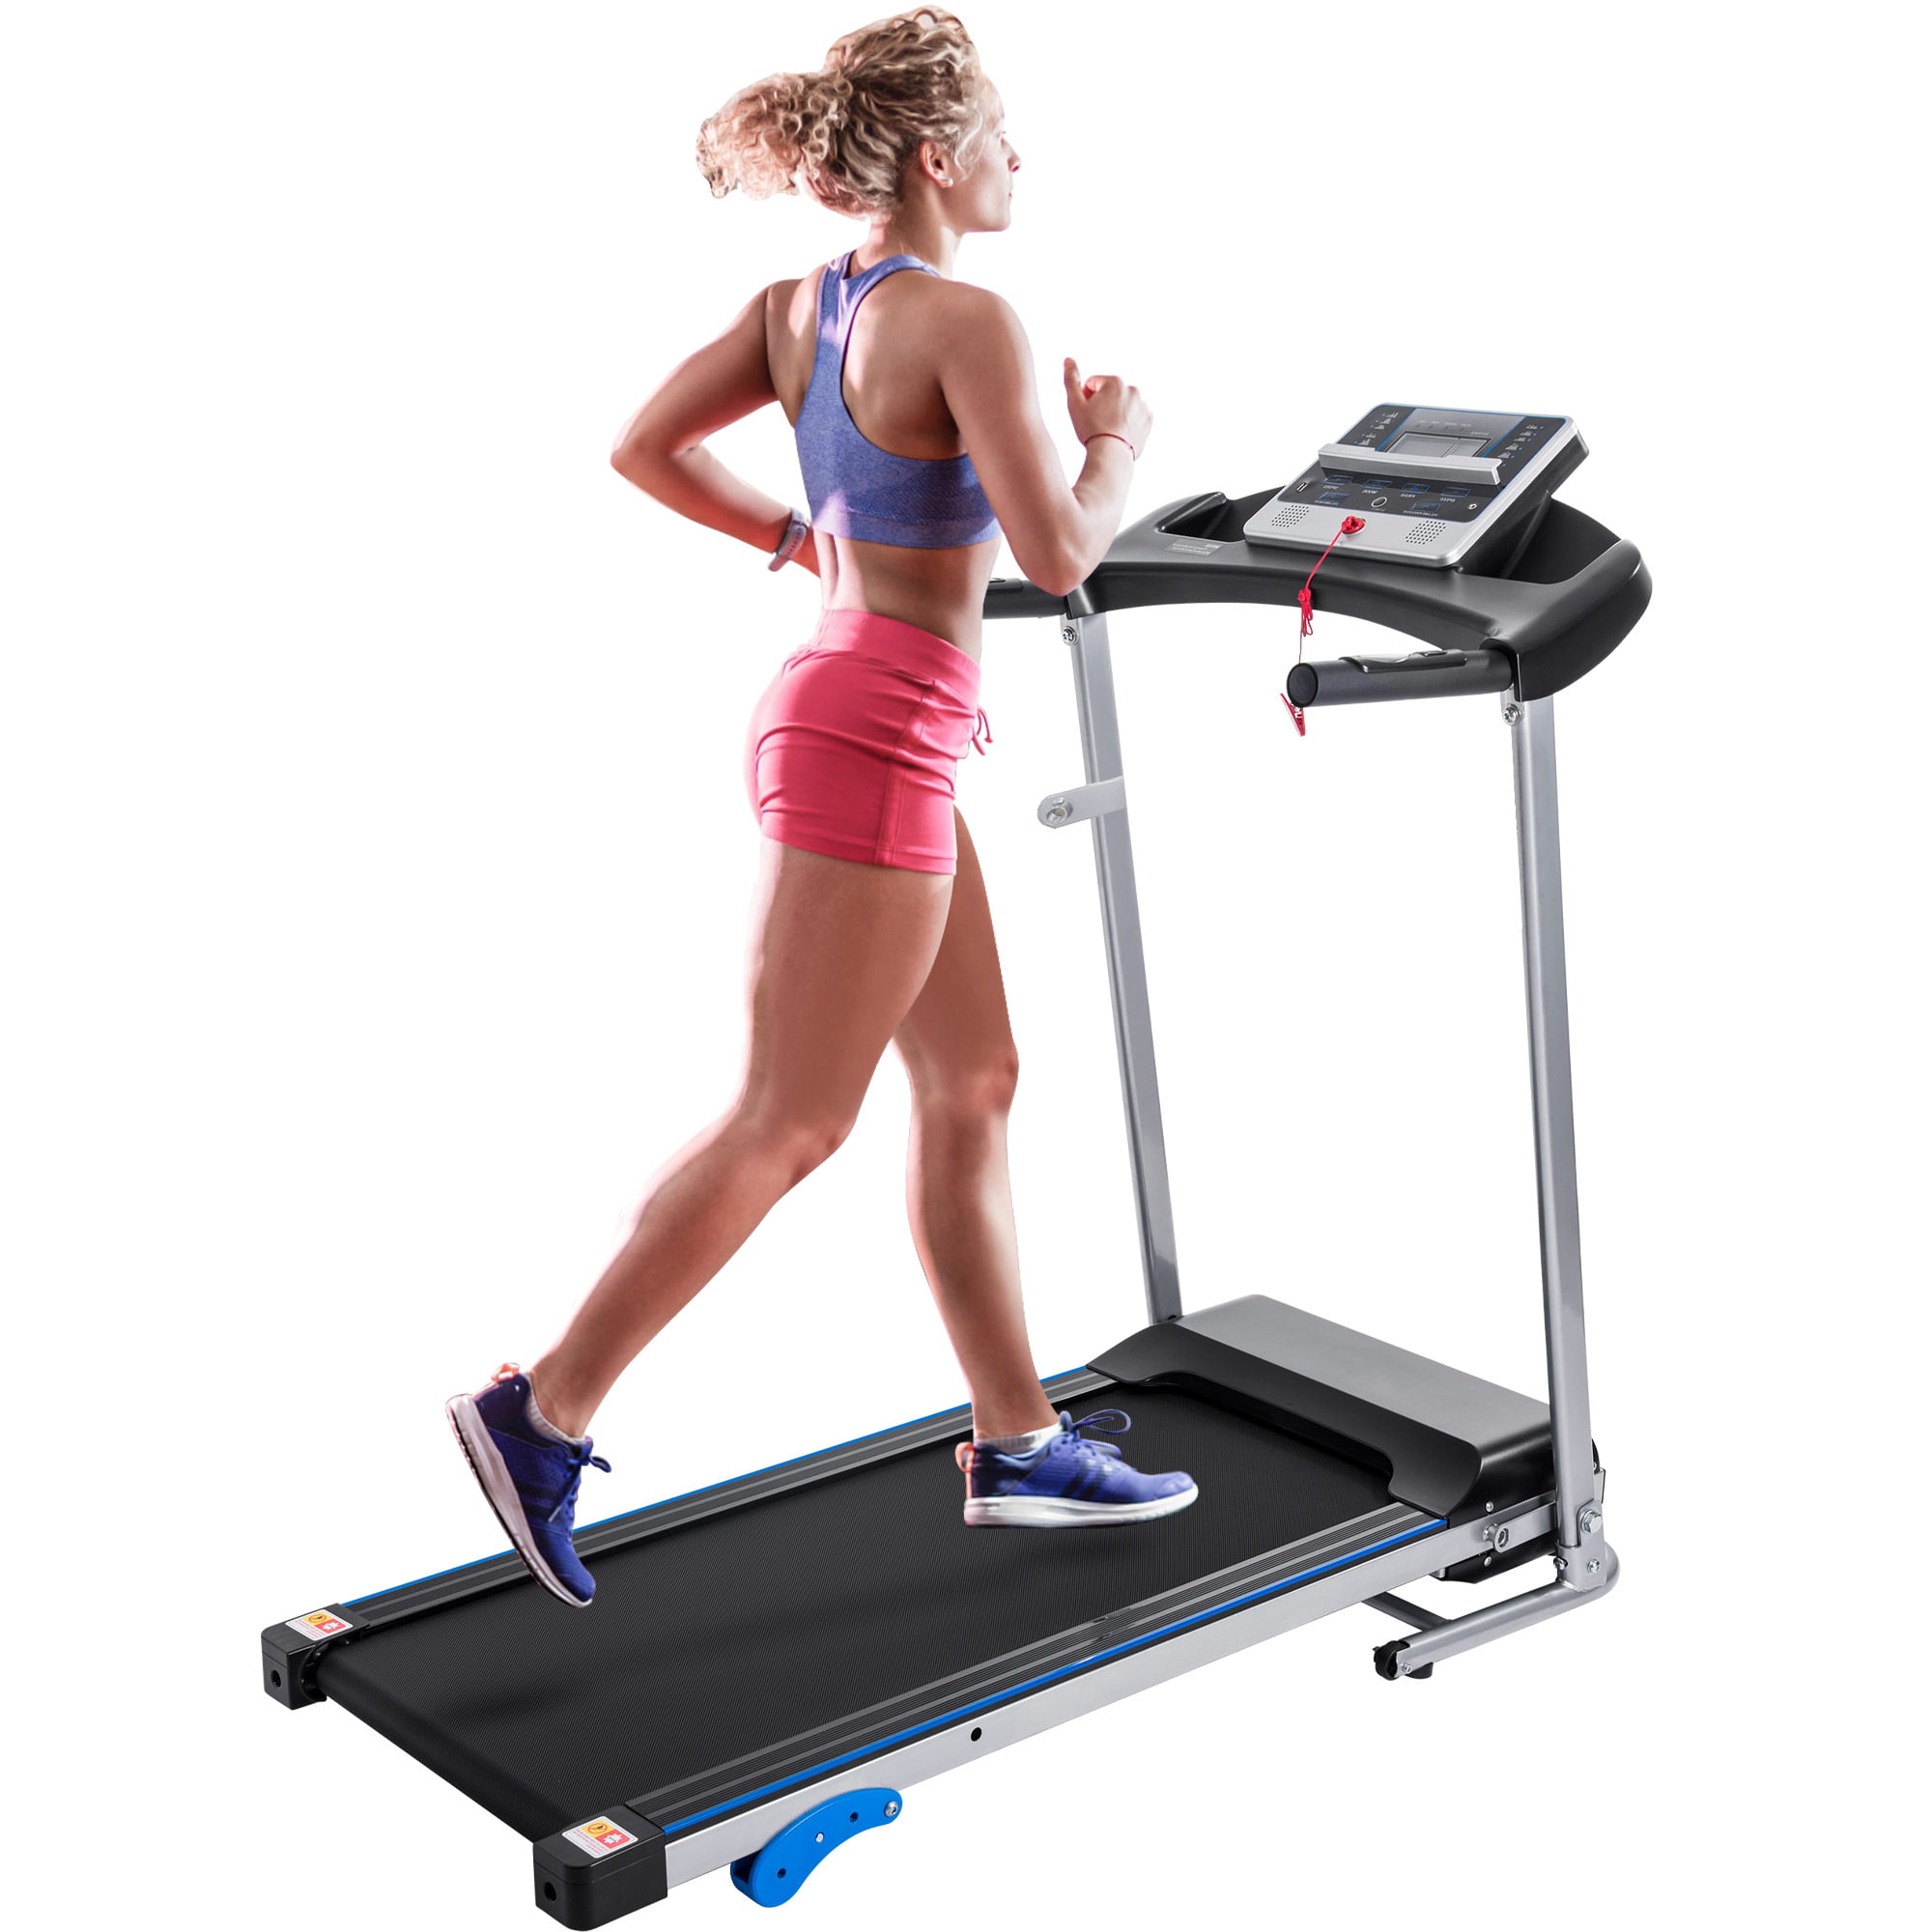 Compact Folding Treadmill, Foldable Treadmill Running Jogging Fitness Machine w/ 12 PreSet LCD